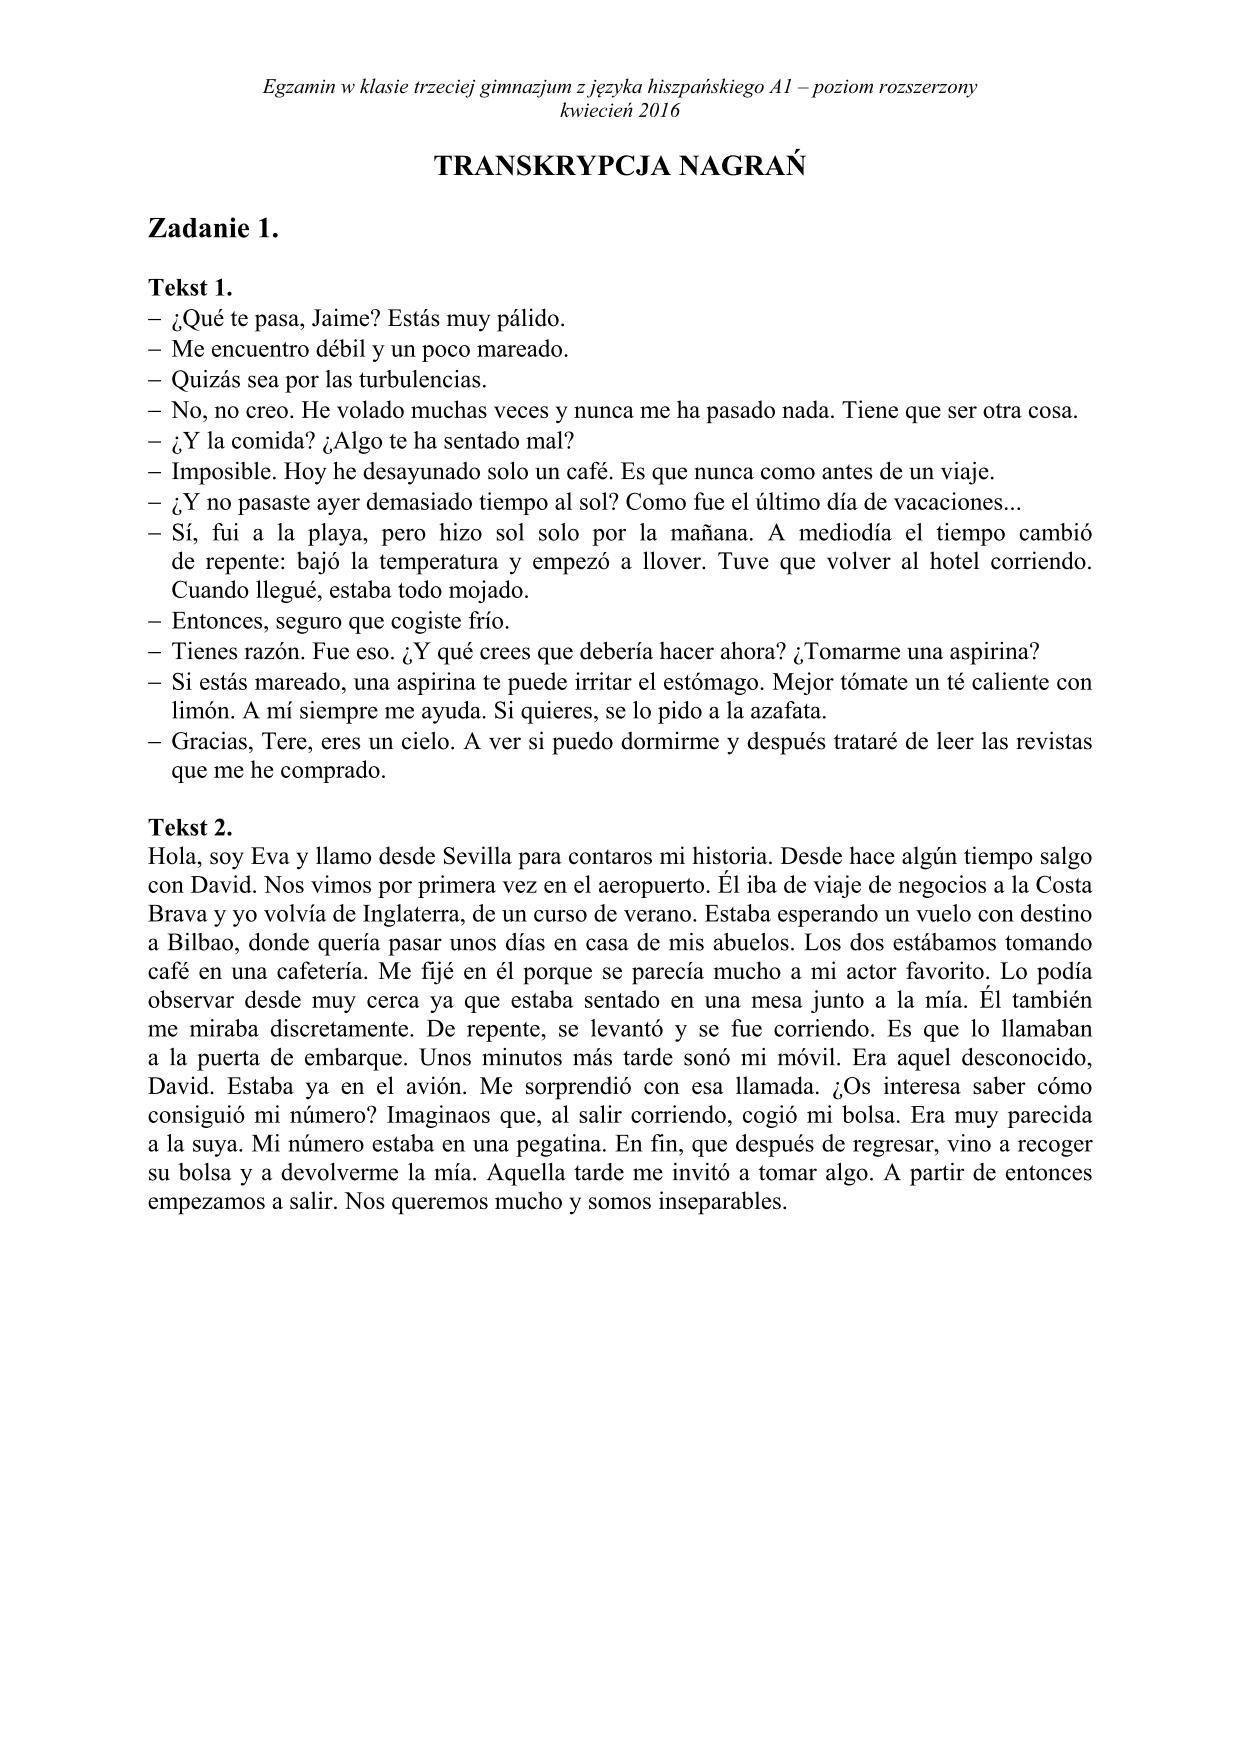 transkrypcja-hiszpanski-poziom-rozszerzony-egzamin-gimnazjalny-2016 - 1